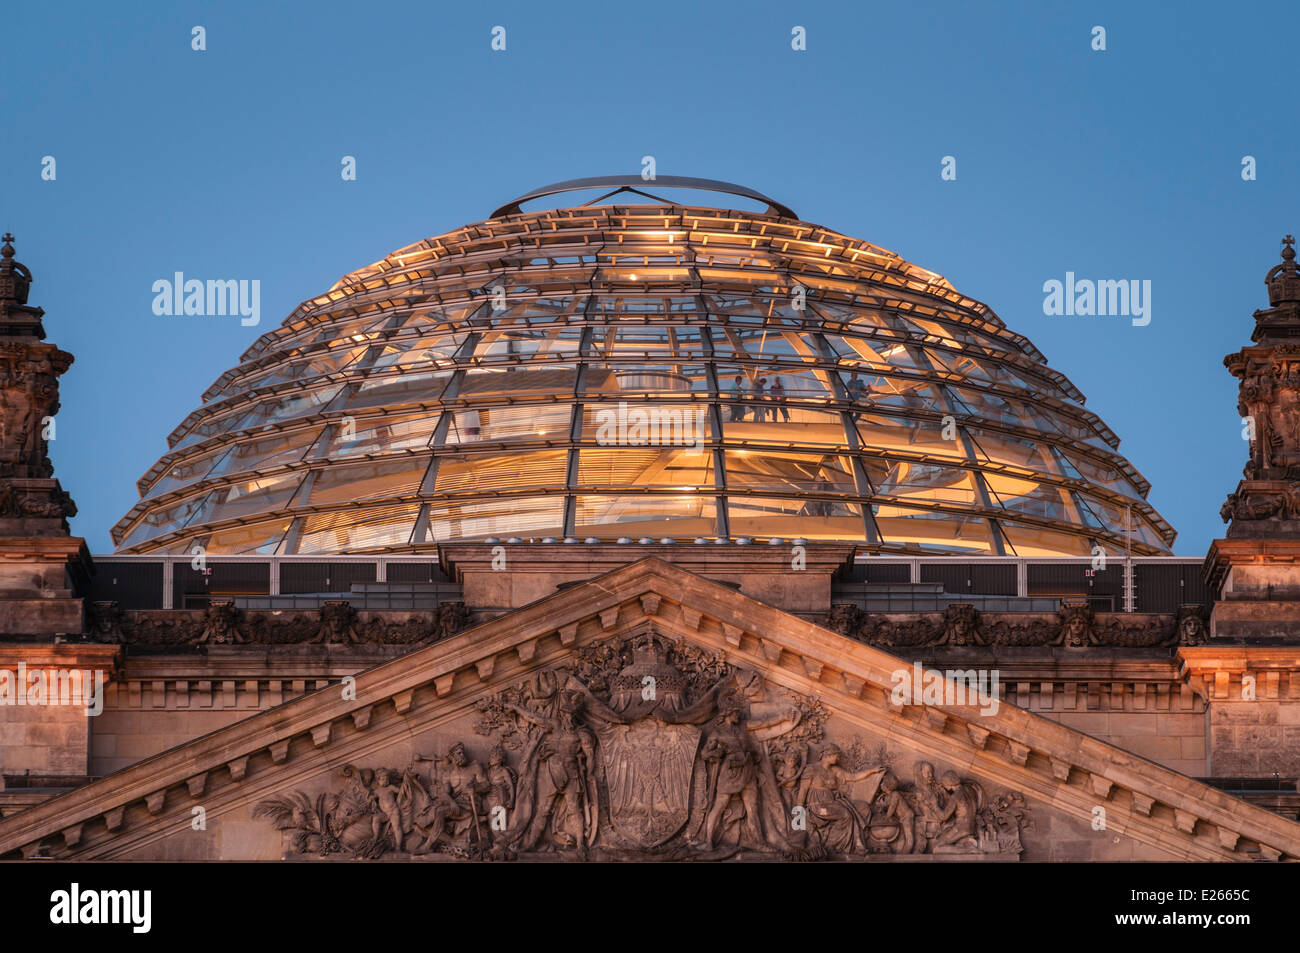 Bâtiment du Reichstag et dome Berlin Allemagne Banque D'Images